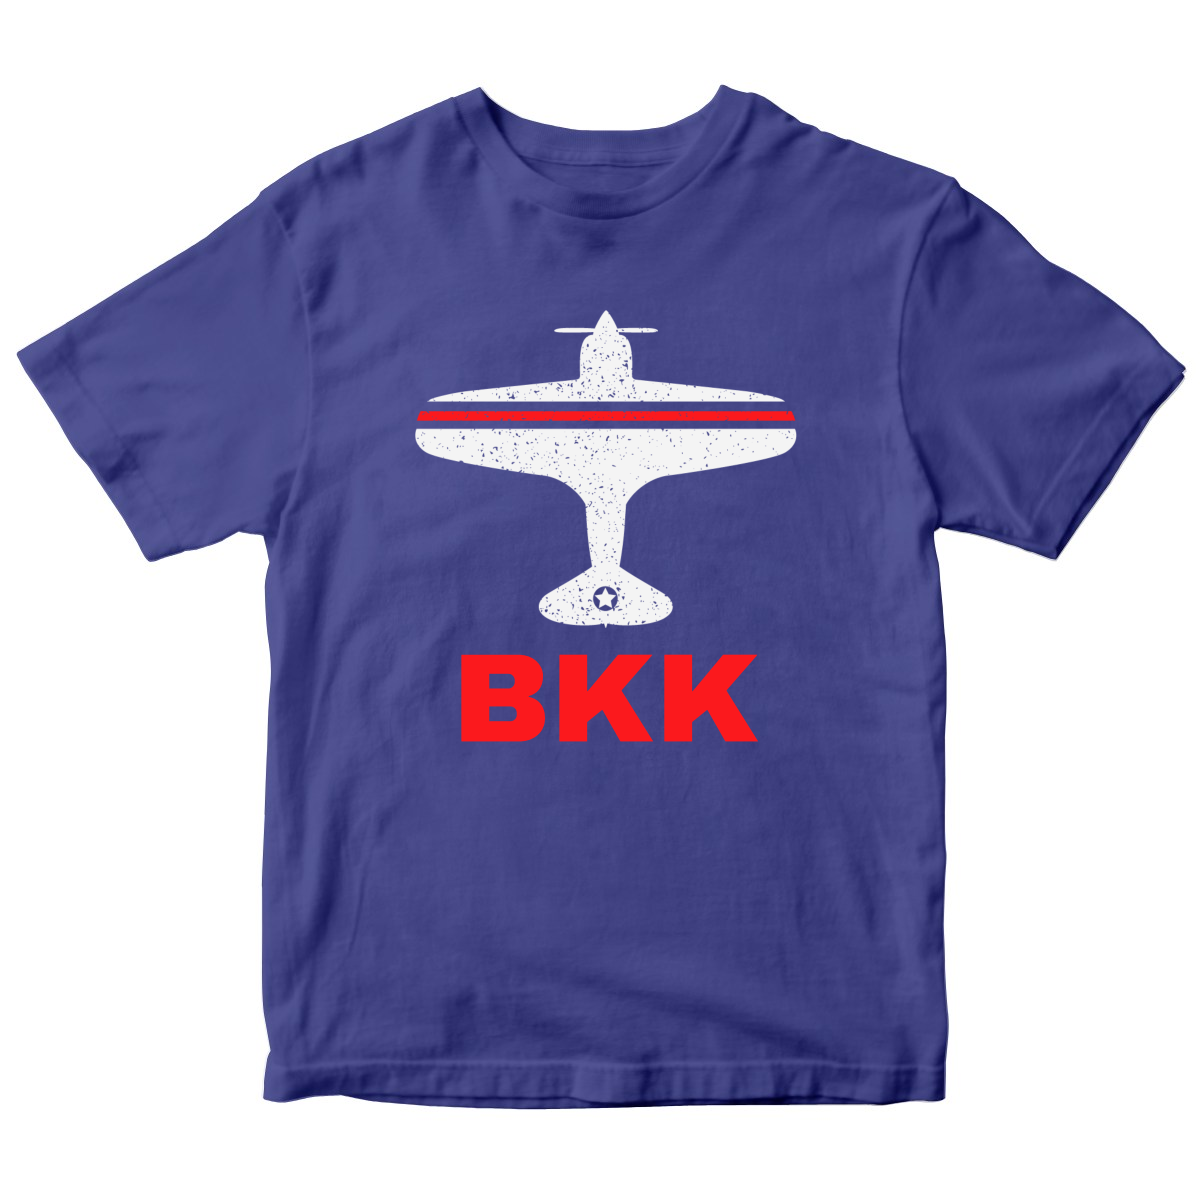 Fly Bangkok BKK Airport Kids T-shirt